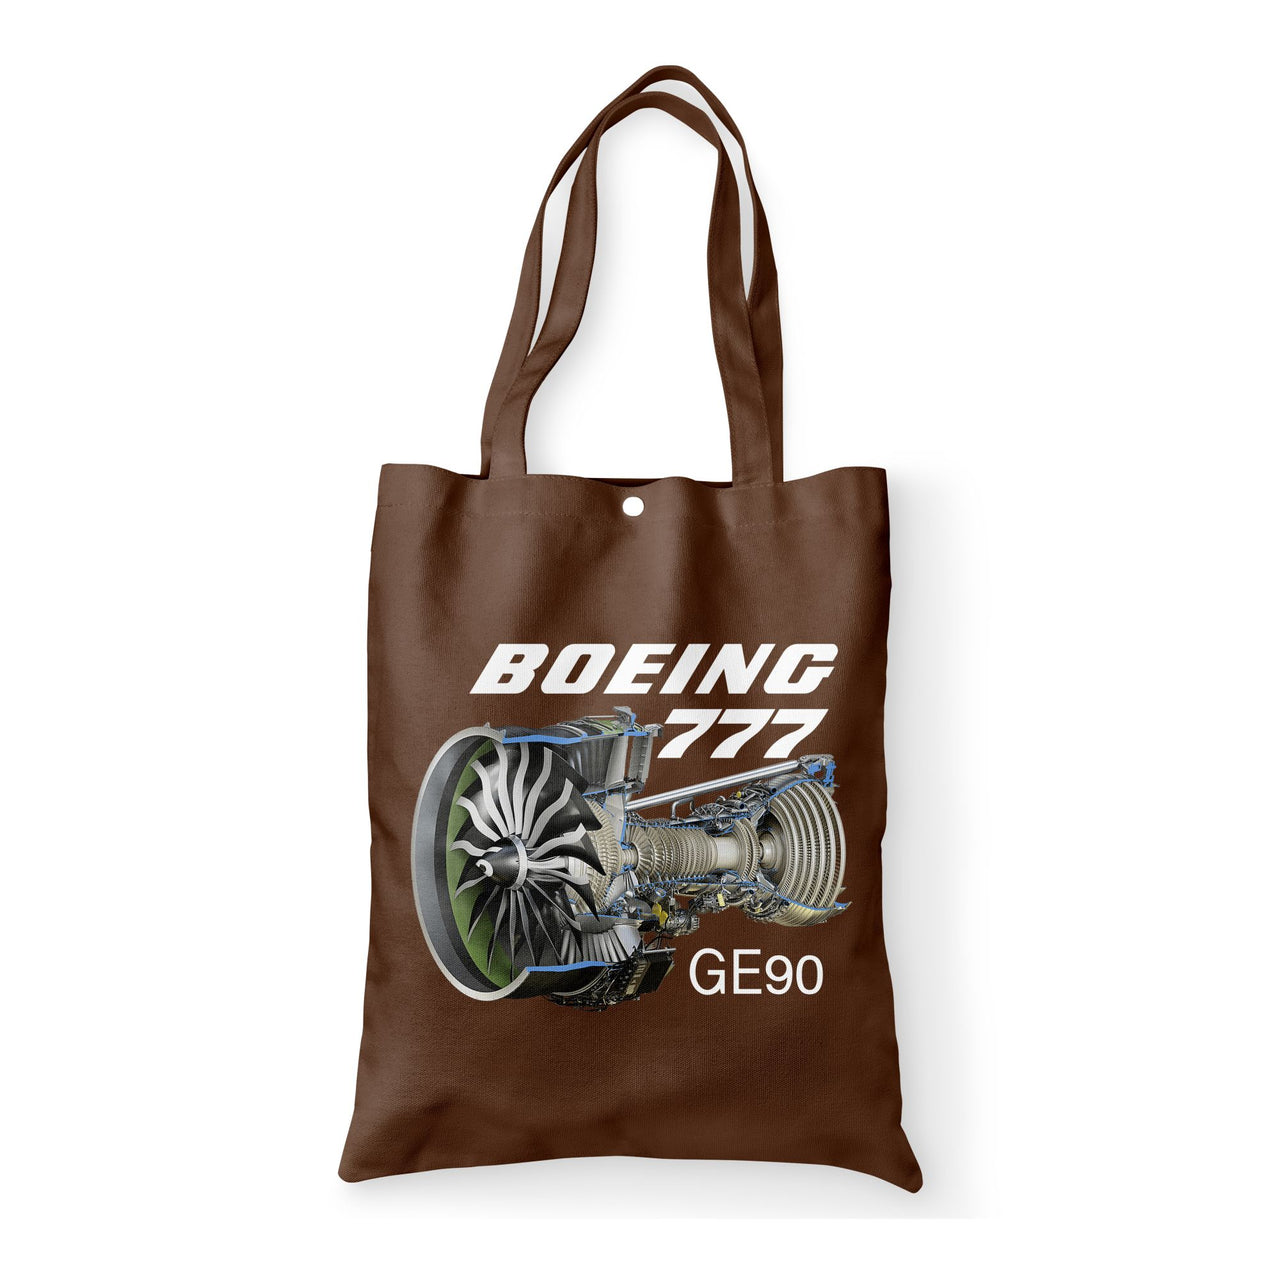 Boeing 777 & GE90 Engine Designed Tote Bags